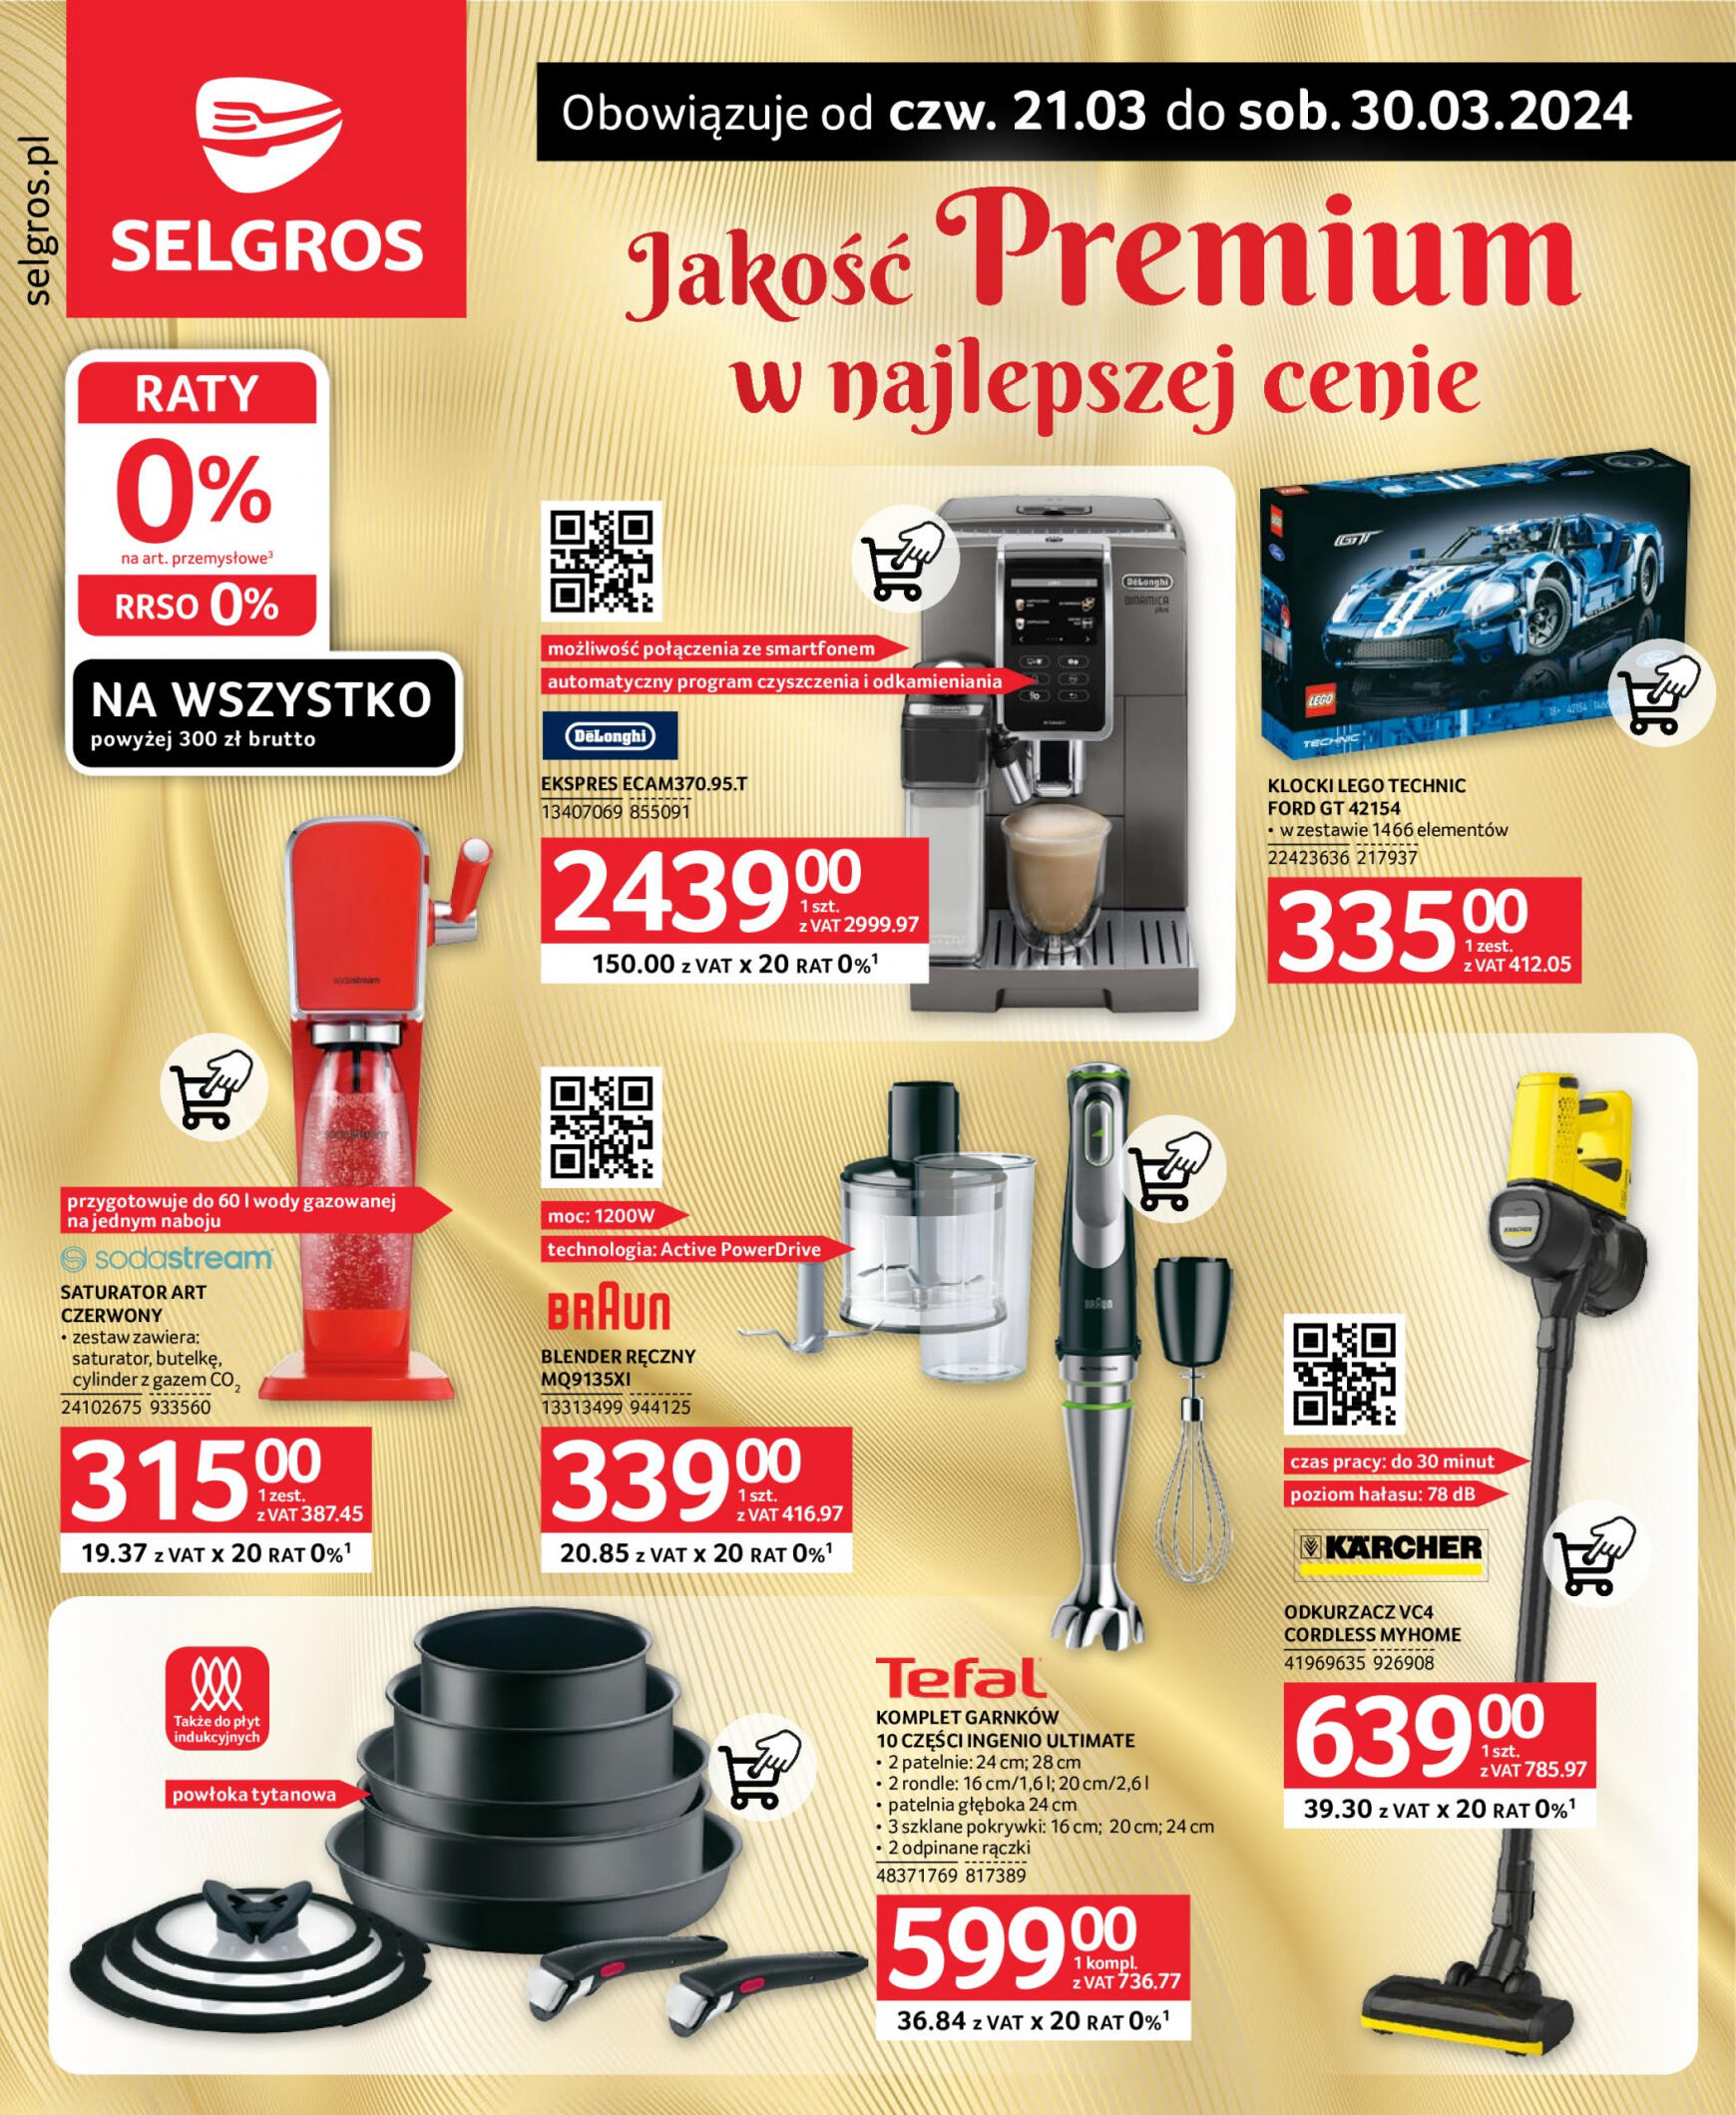 selgros - Selgros cash&carry - Premium obowiązuje od 21.03.2024